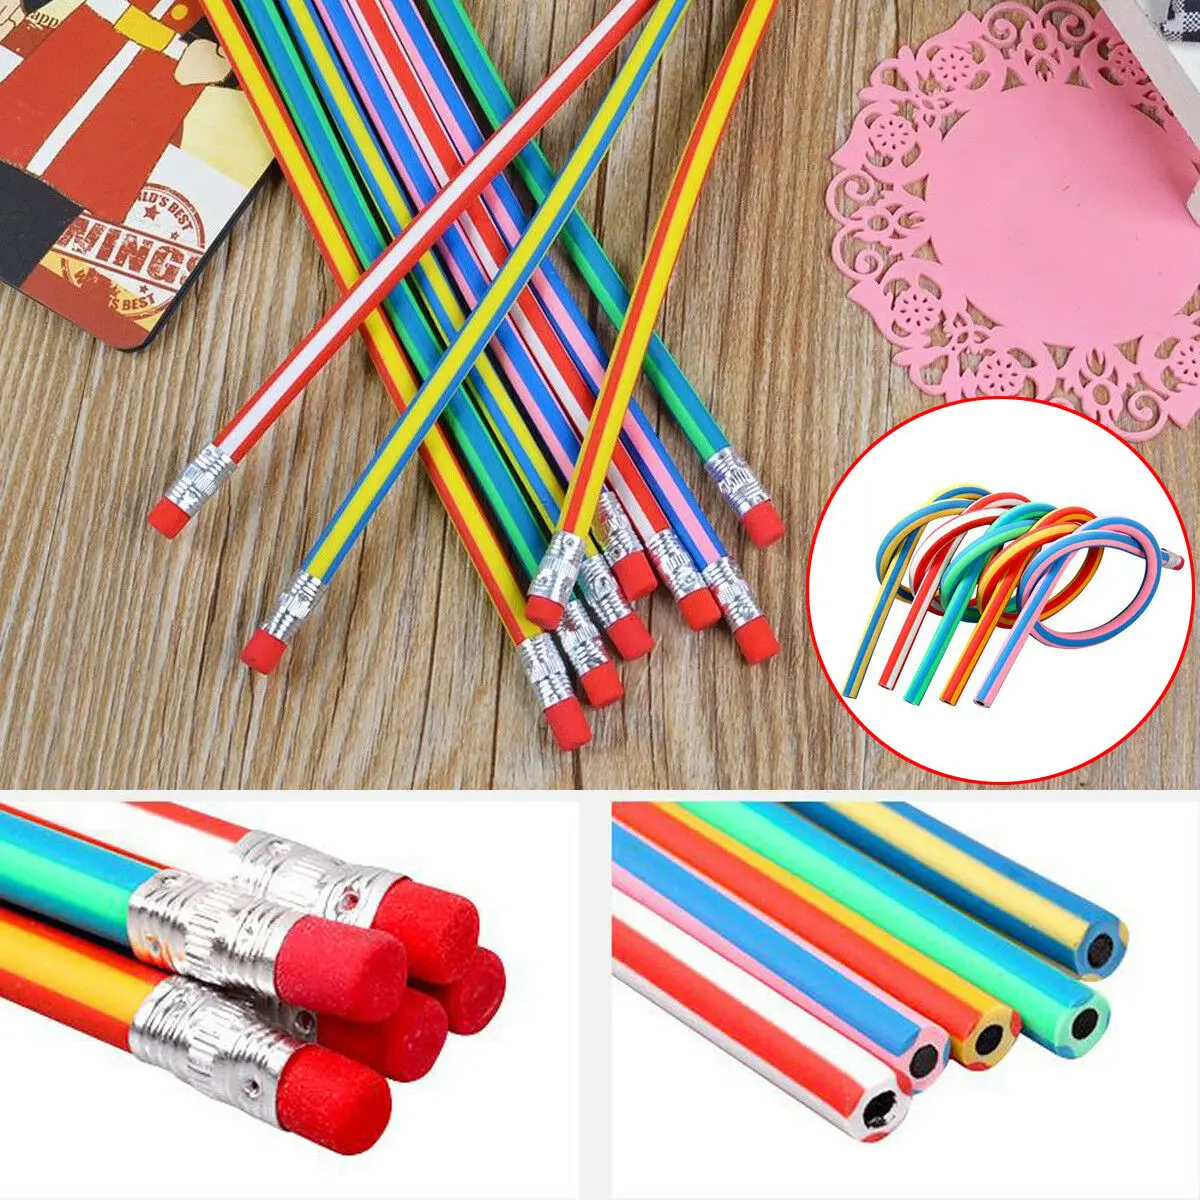 18 Pieces Flexible Bendy Pencils Colorful Soft Bendable Pencils 6 Colors Magic Bend Pencils with Eraser for School Kids Teachers Prizes Presents Classroom Supplies 